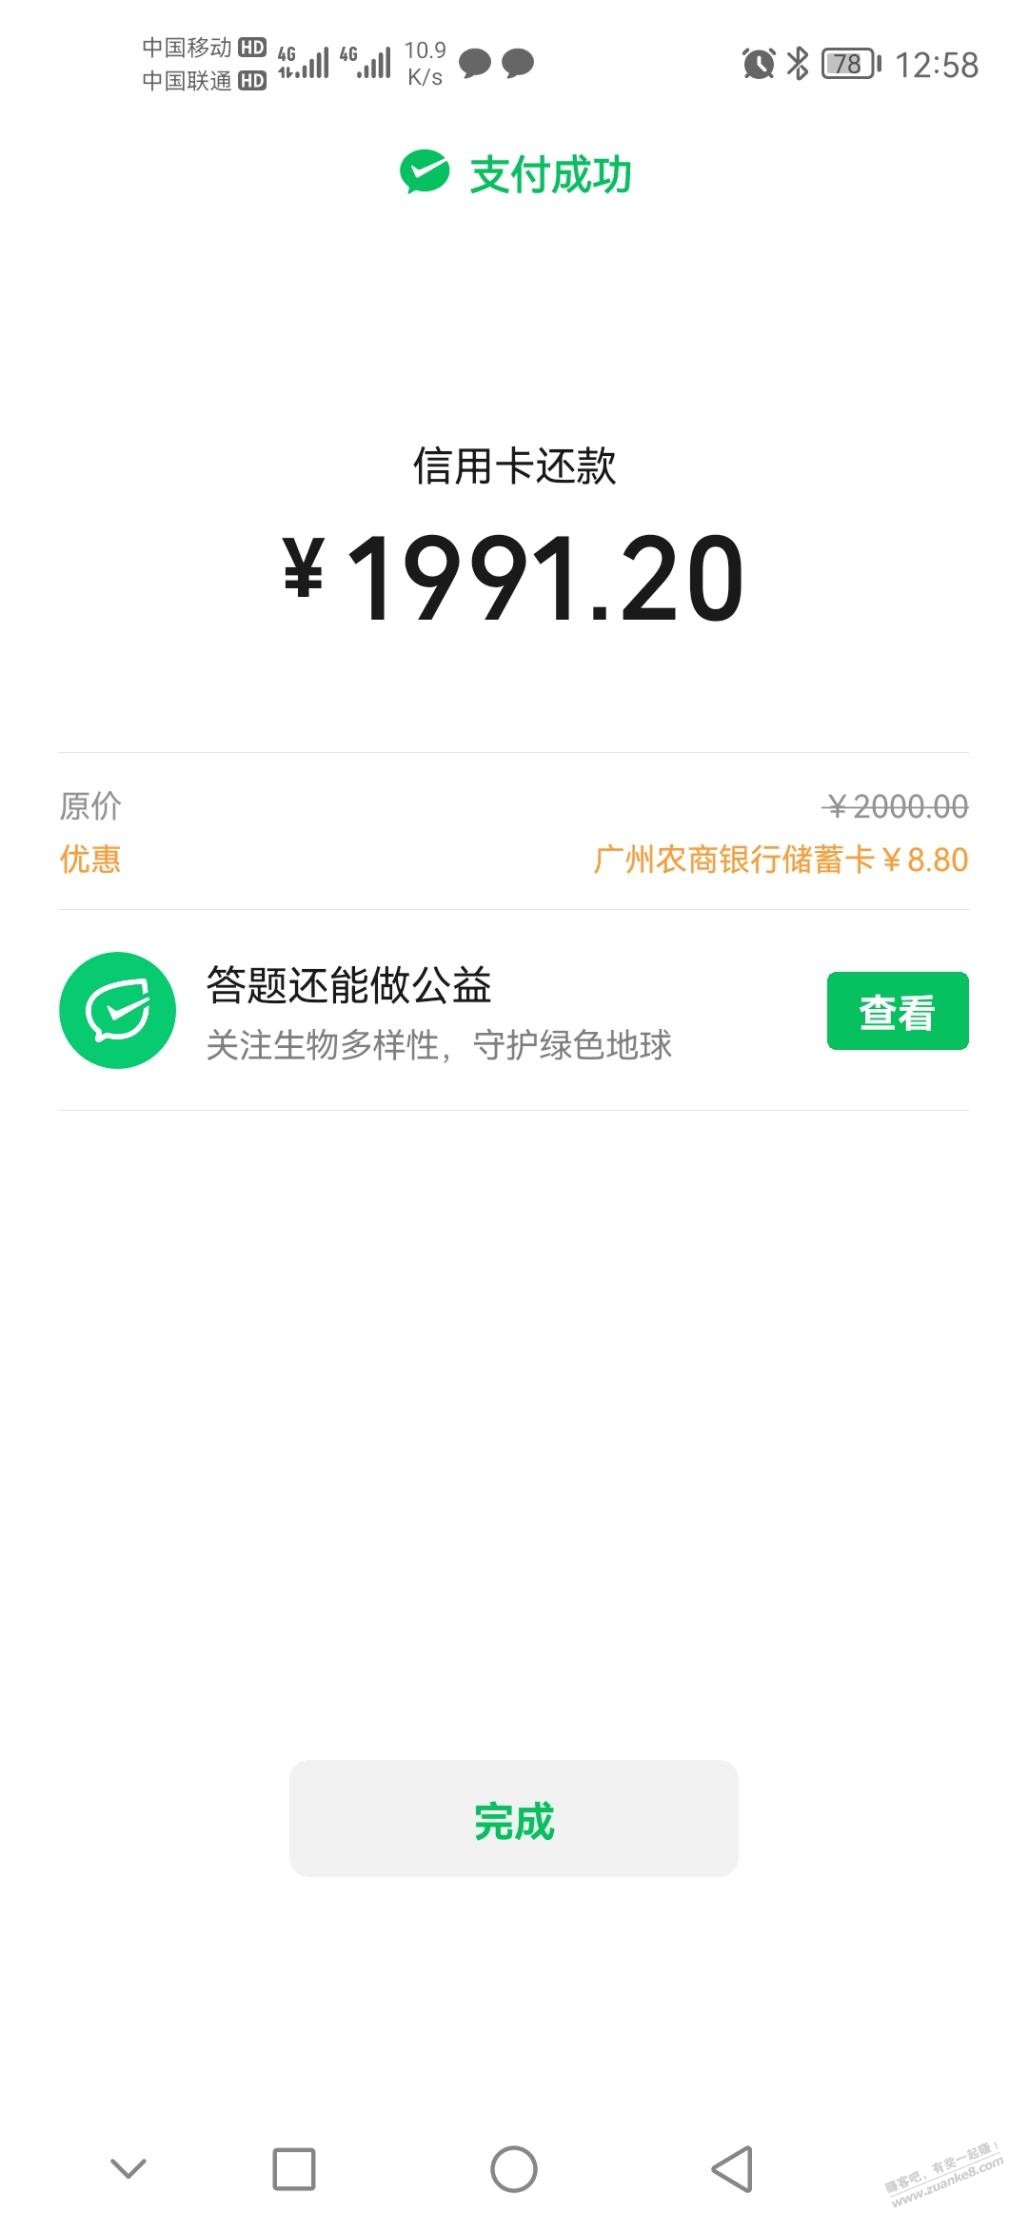 xing/用卡2000减8点8广州农商银行-惠小助(52huixz.com)